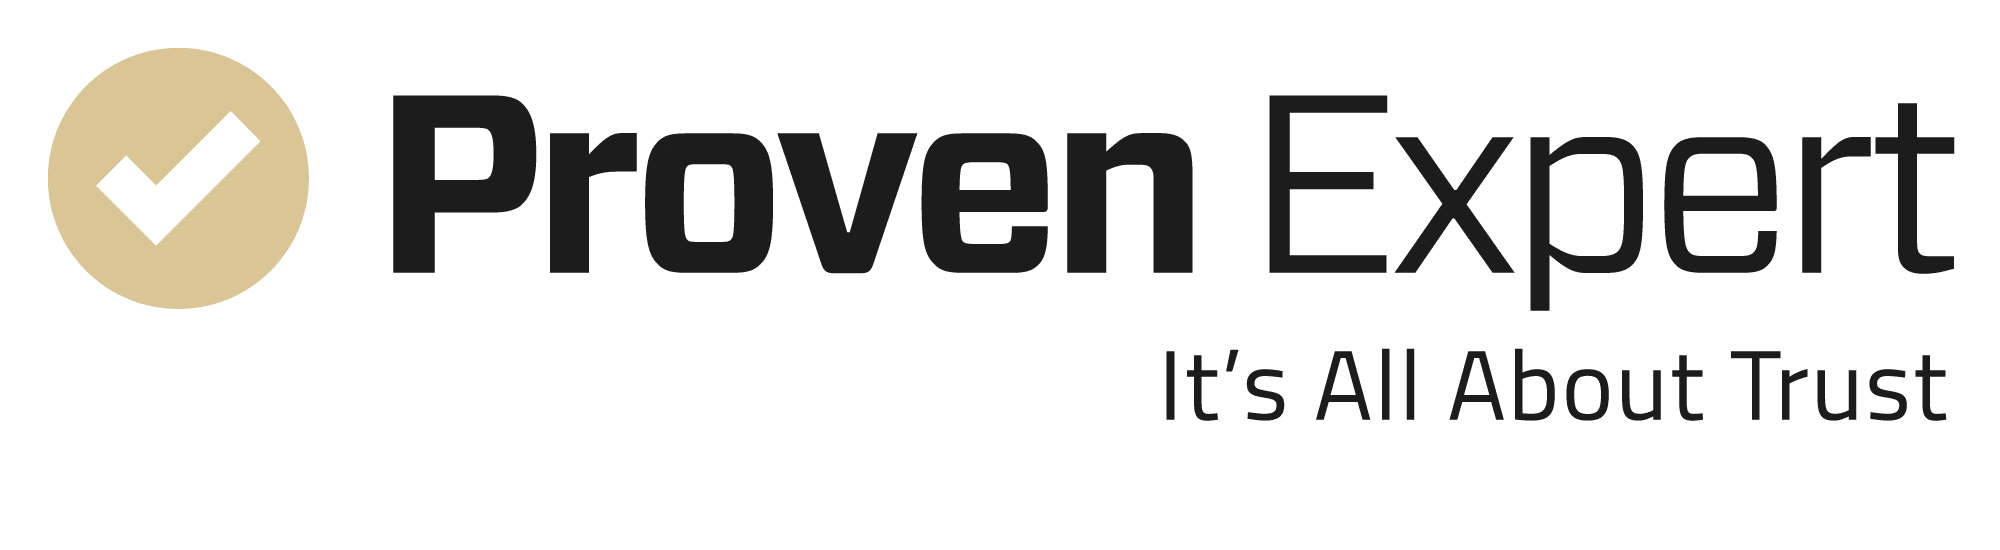 provenexpert logo with claim | Immobilienmakler Taunus